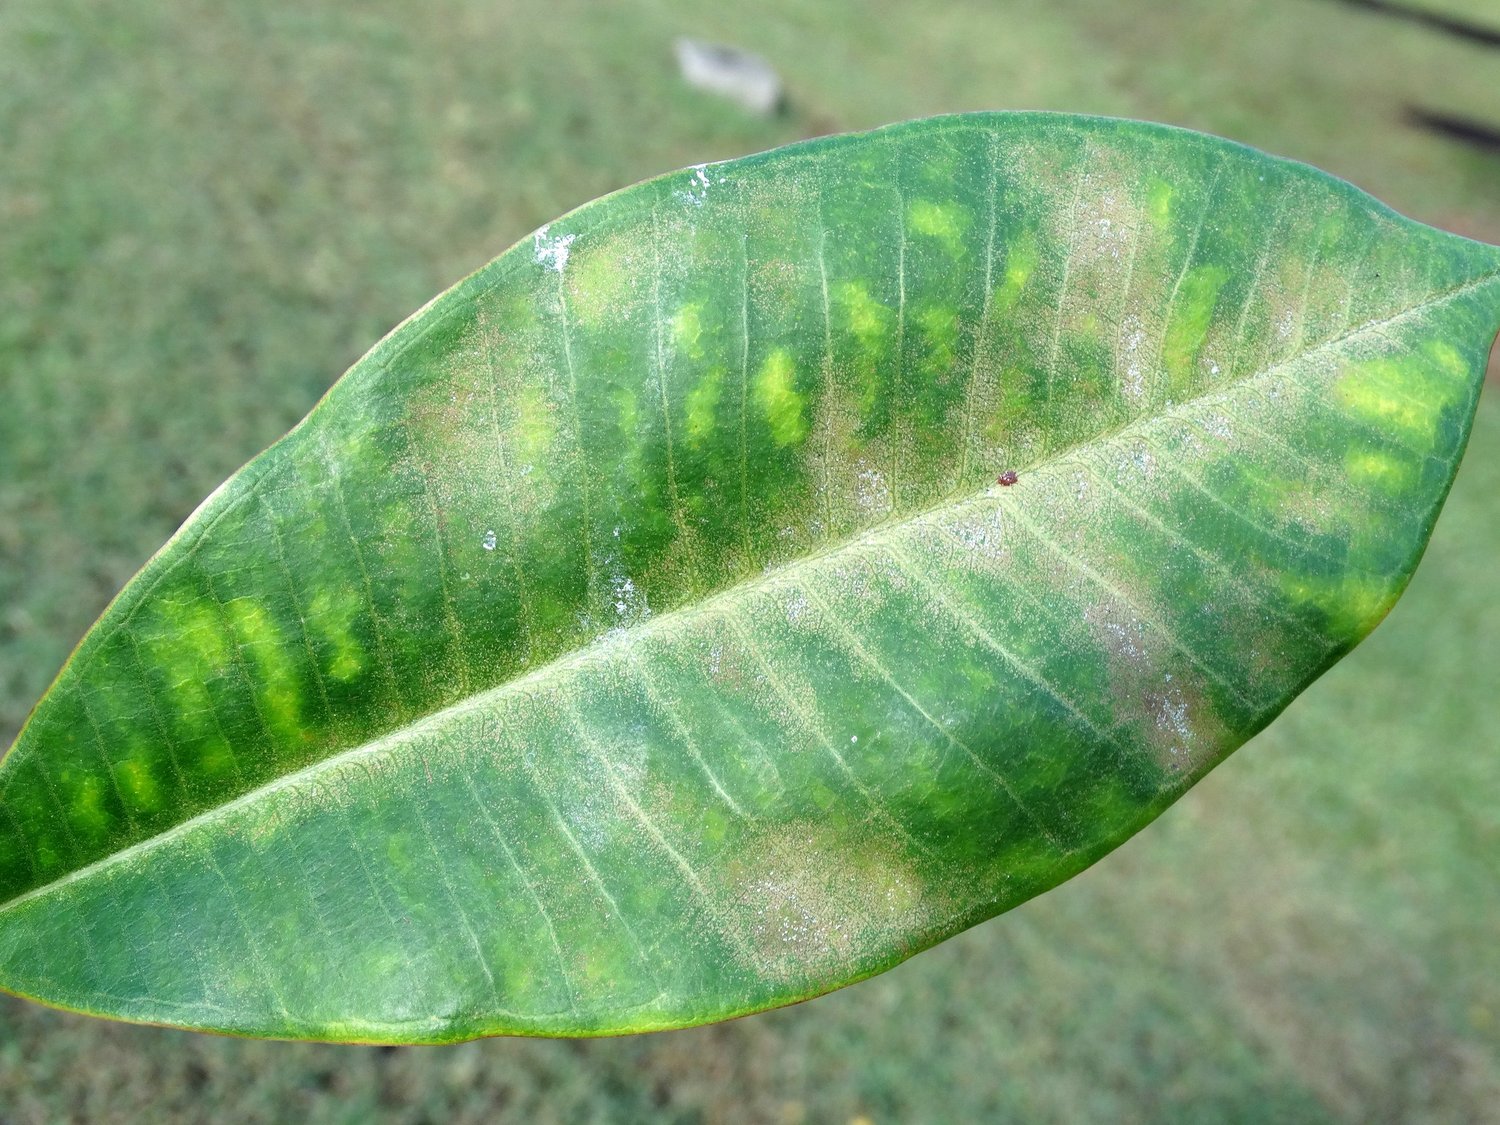 marks on a leaf